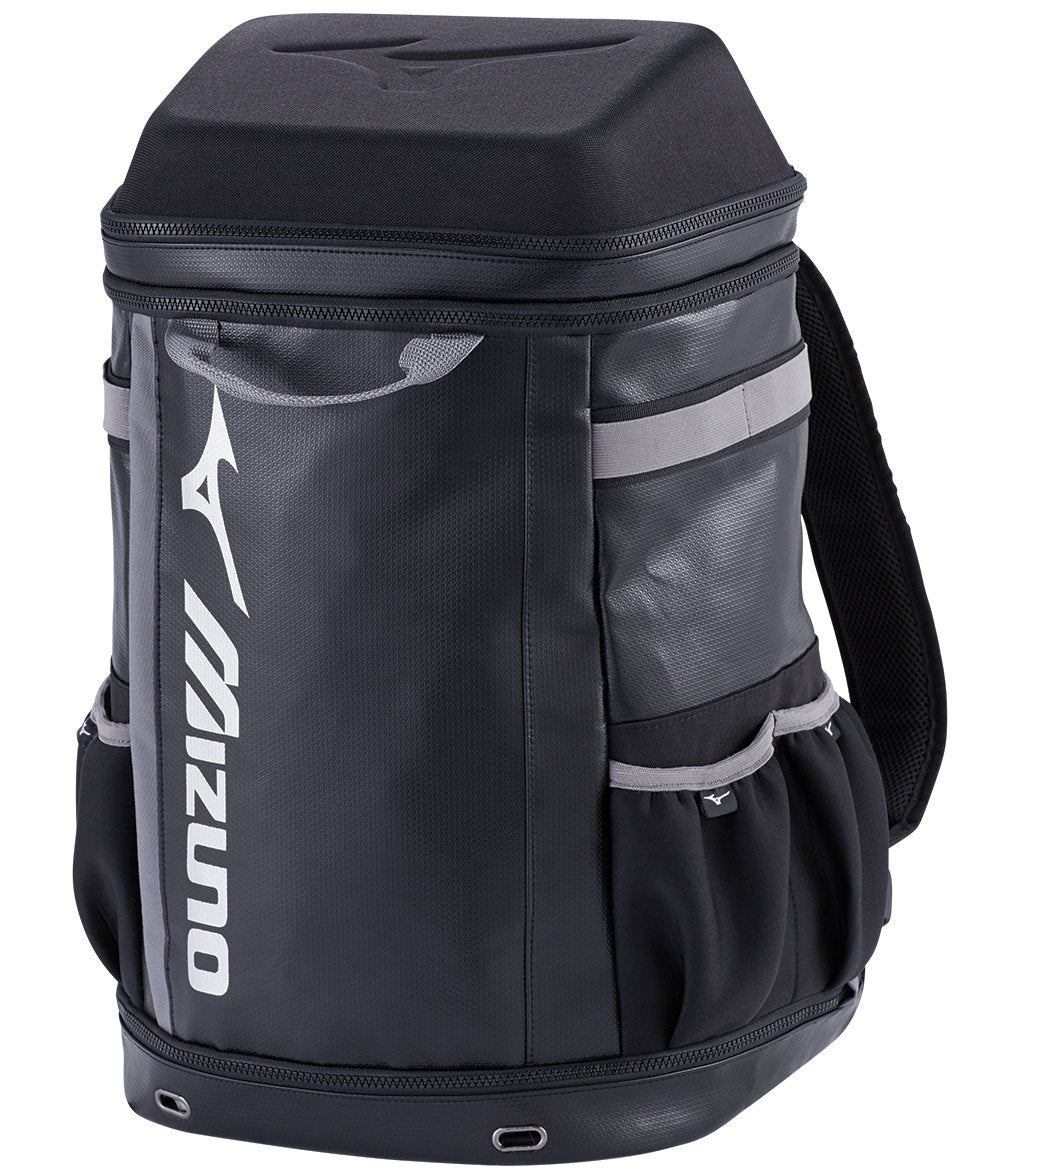 Mizuno Pro G2 Batpack - Black-Grey Black/Grey - Swimoutlet.com